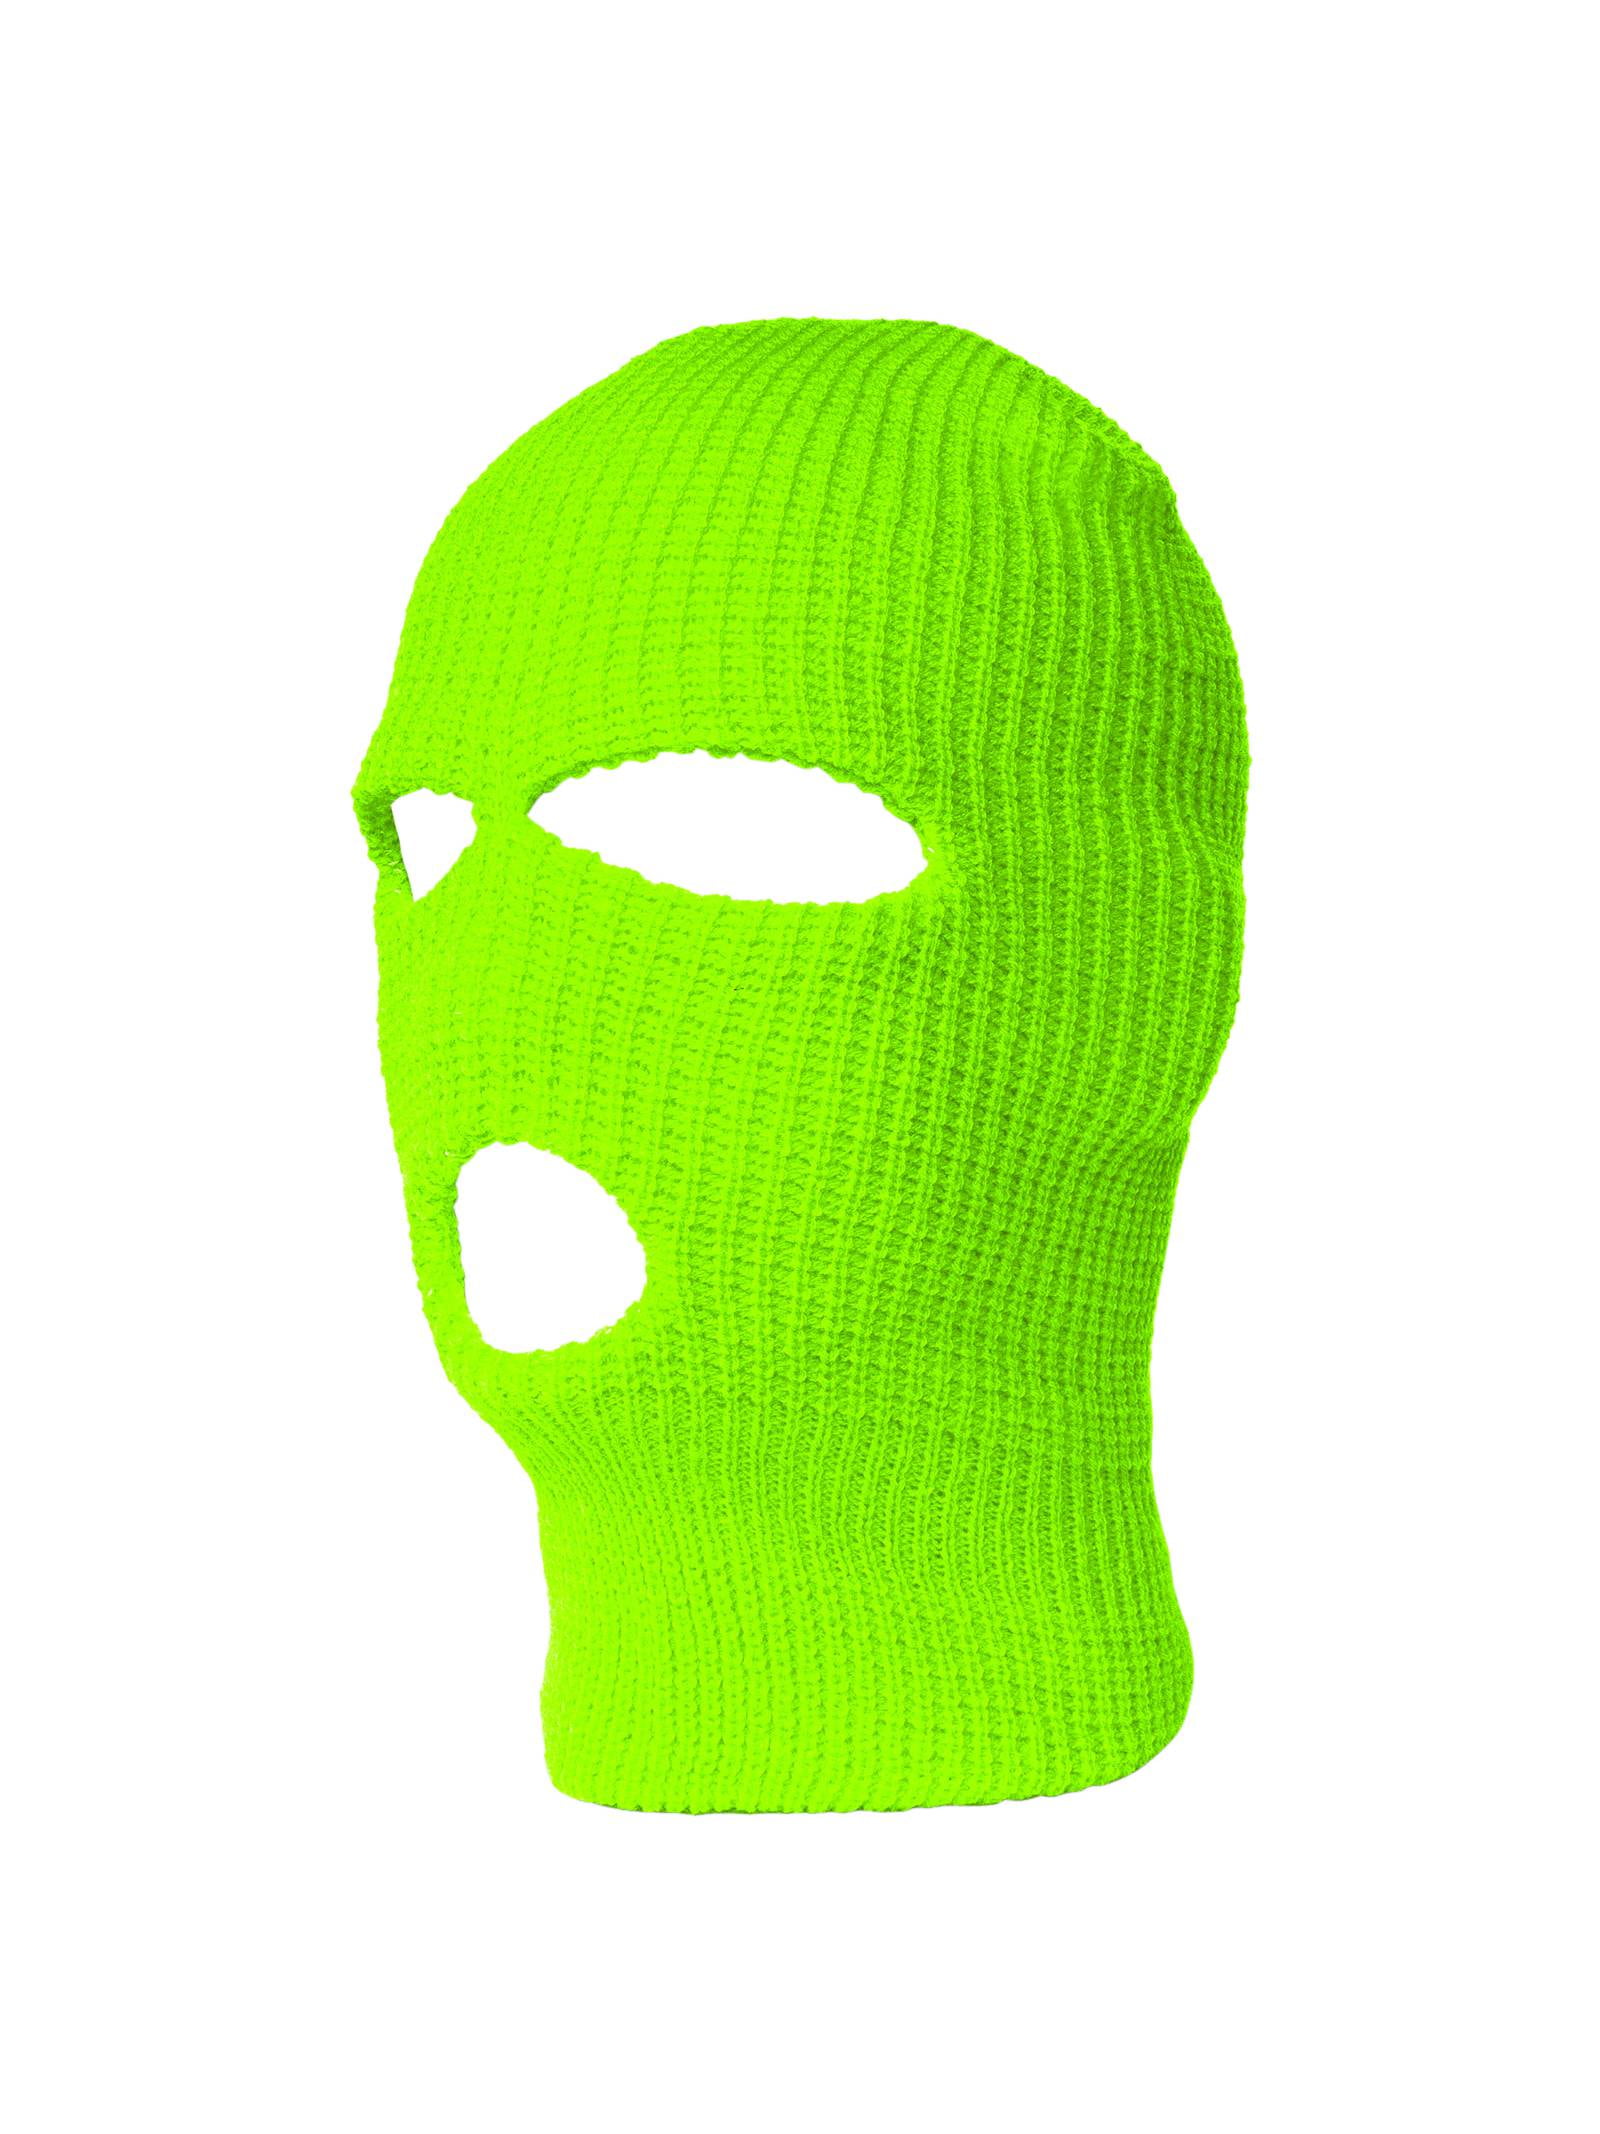 TopHeadwear's 3 Ski Mask, Neon - Walmart.com